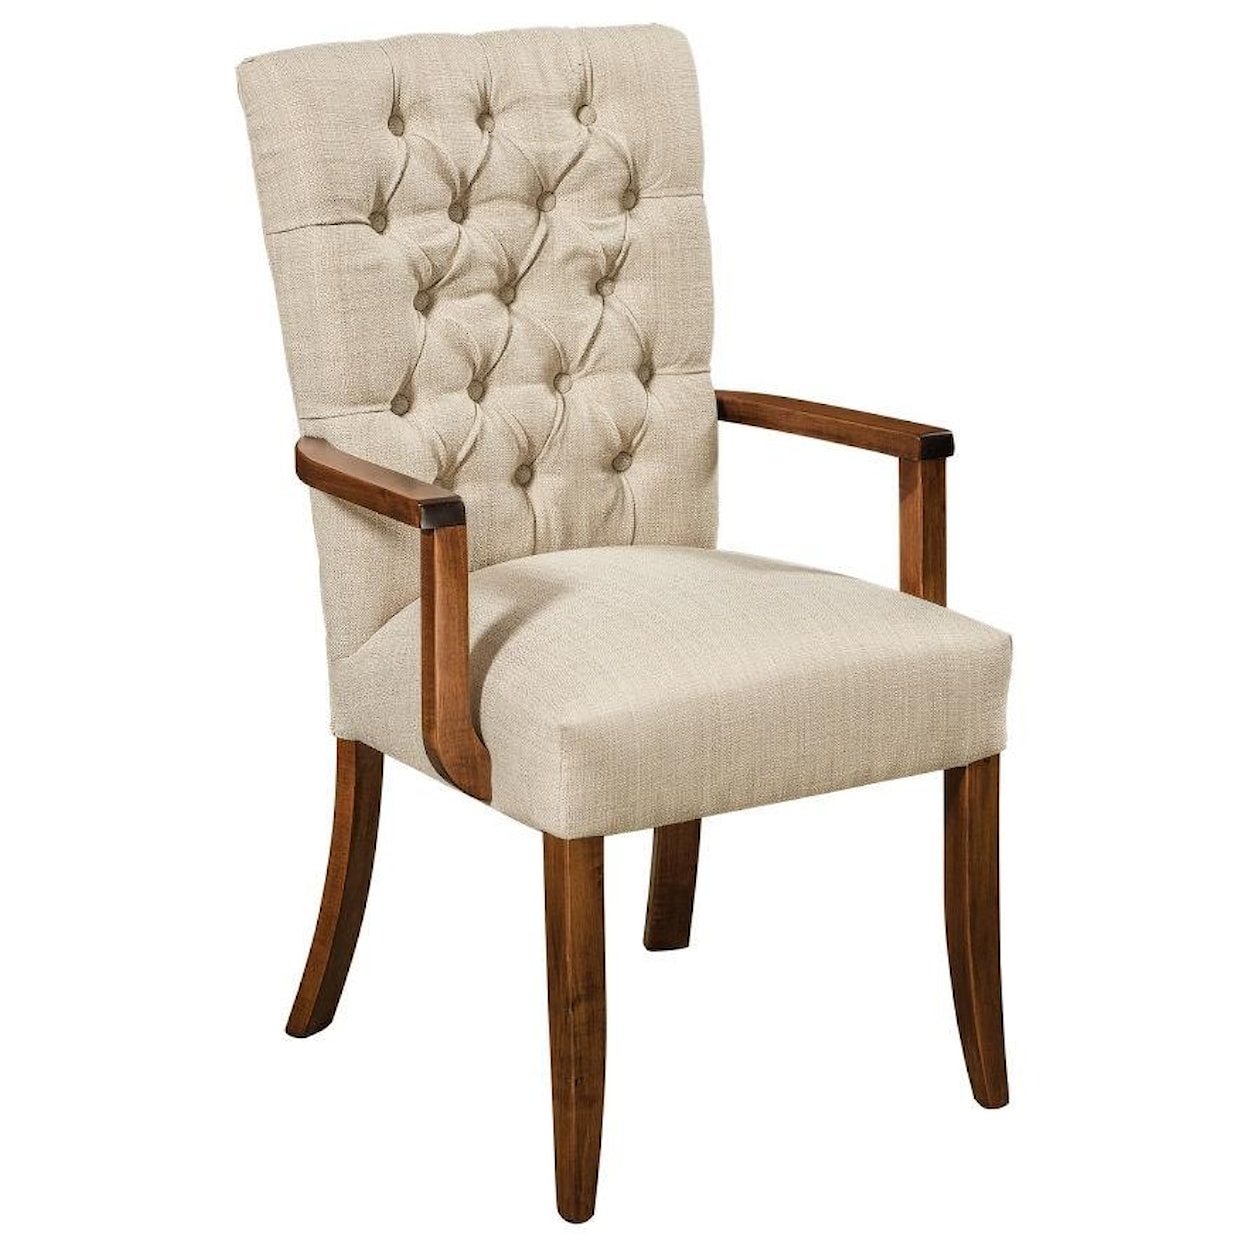 F&N Woodworking Alana Arm Chair